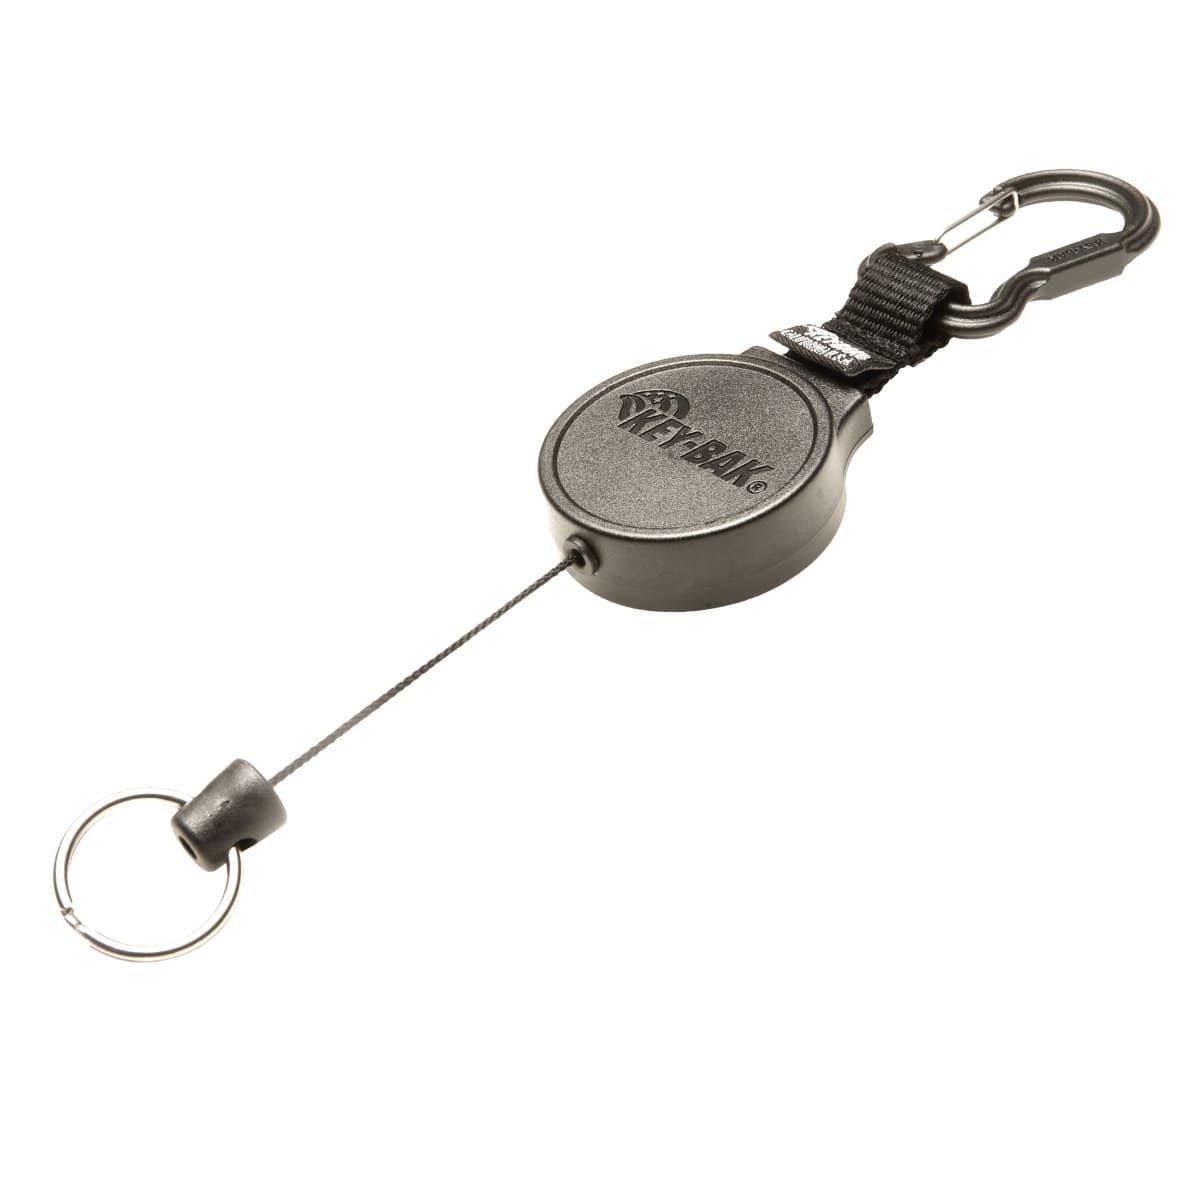 Key-Bak #6C Retractable Carabiner Key Ring and more Heavy Duty